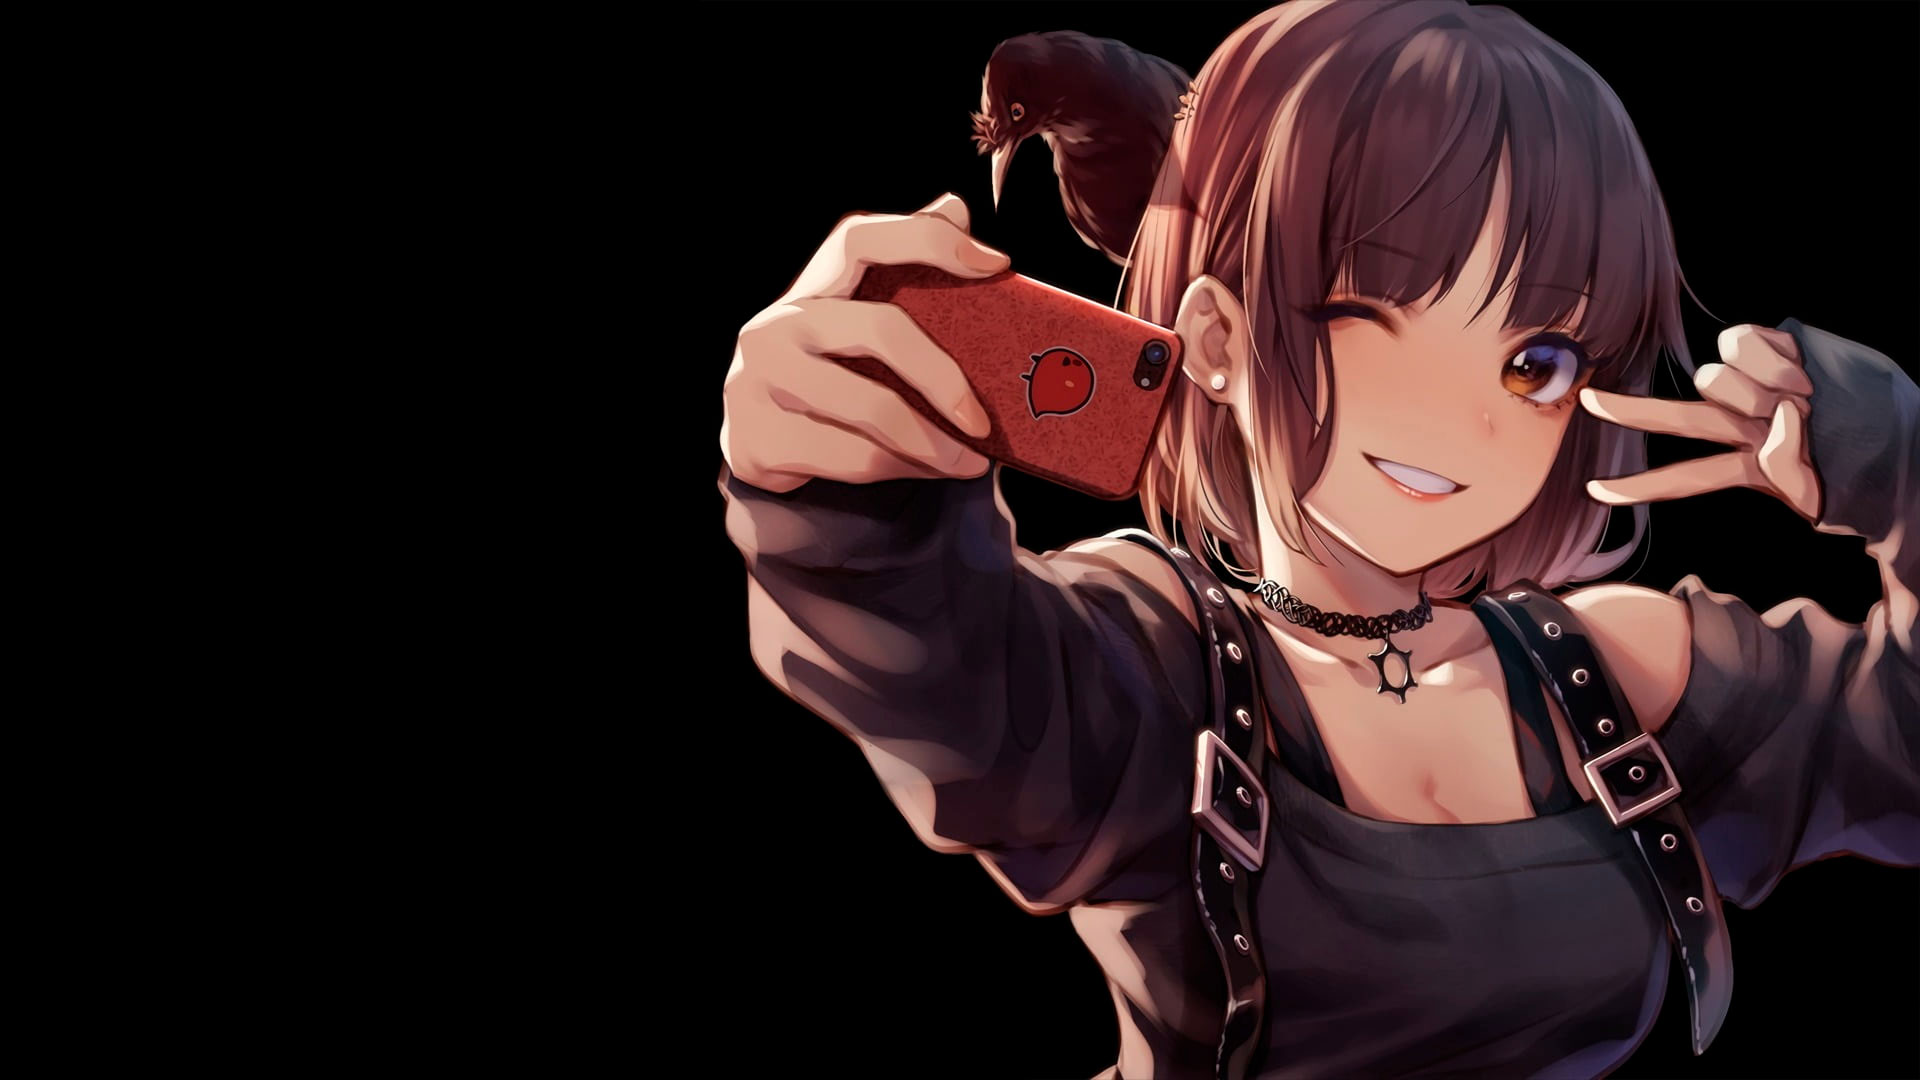 Wallpaper Female Anime Character Holding Smartphone